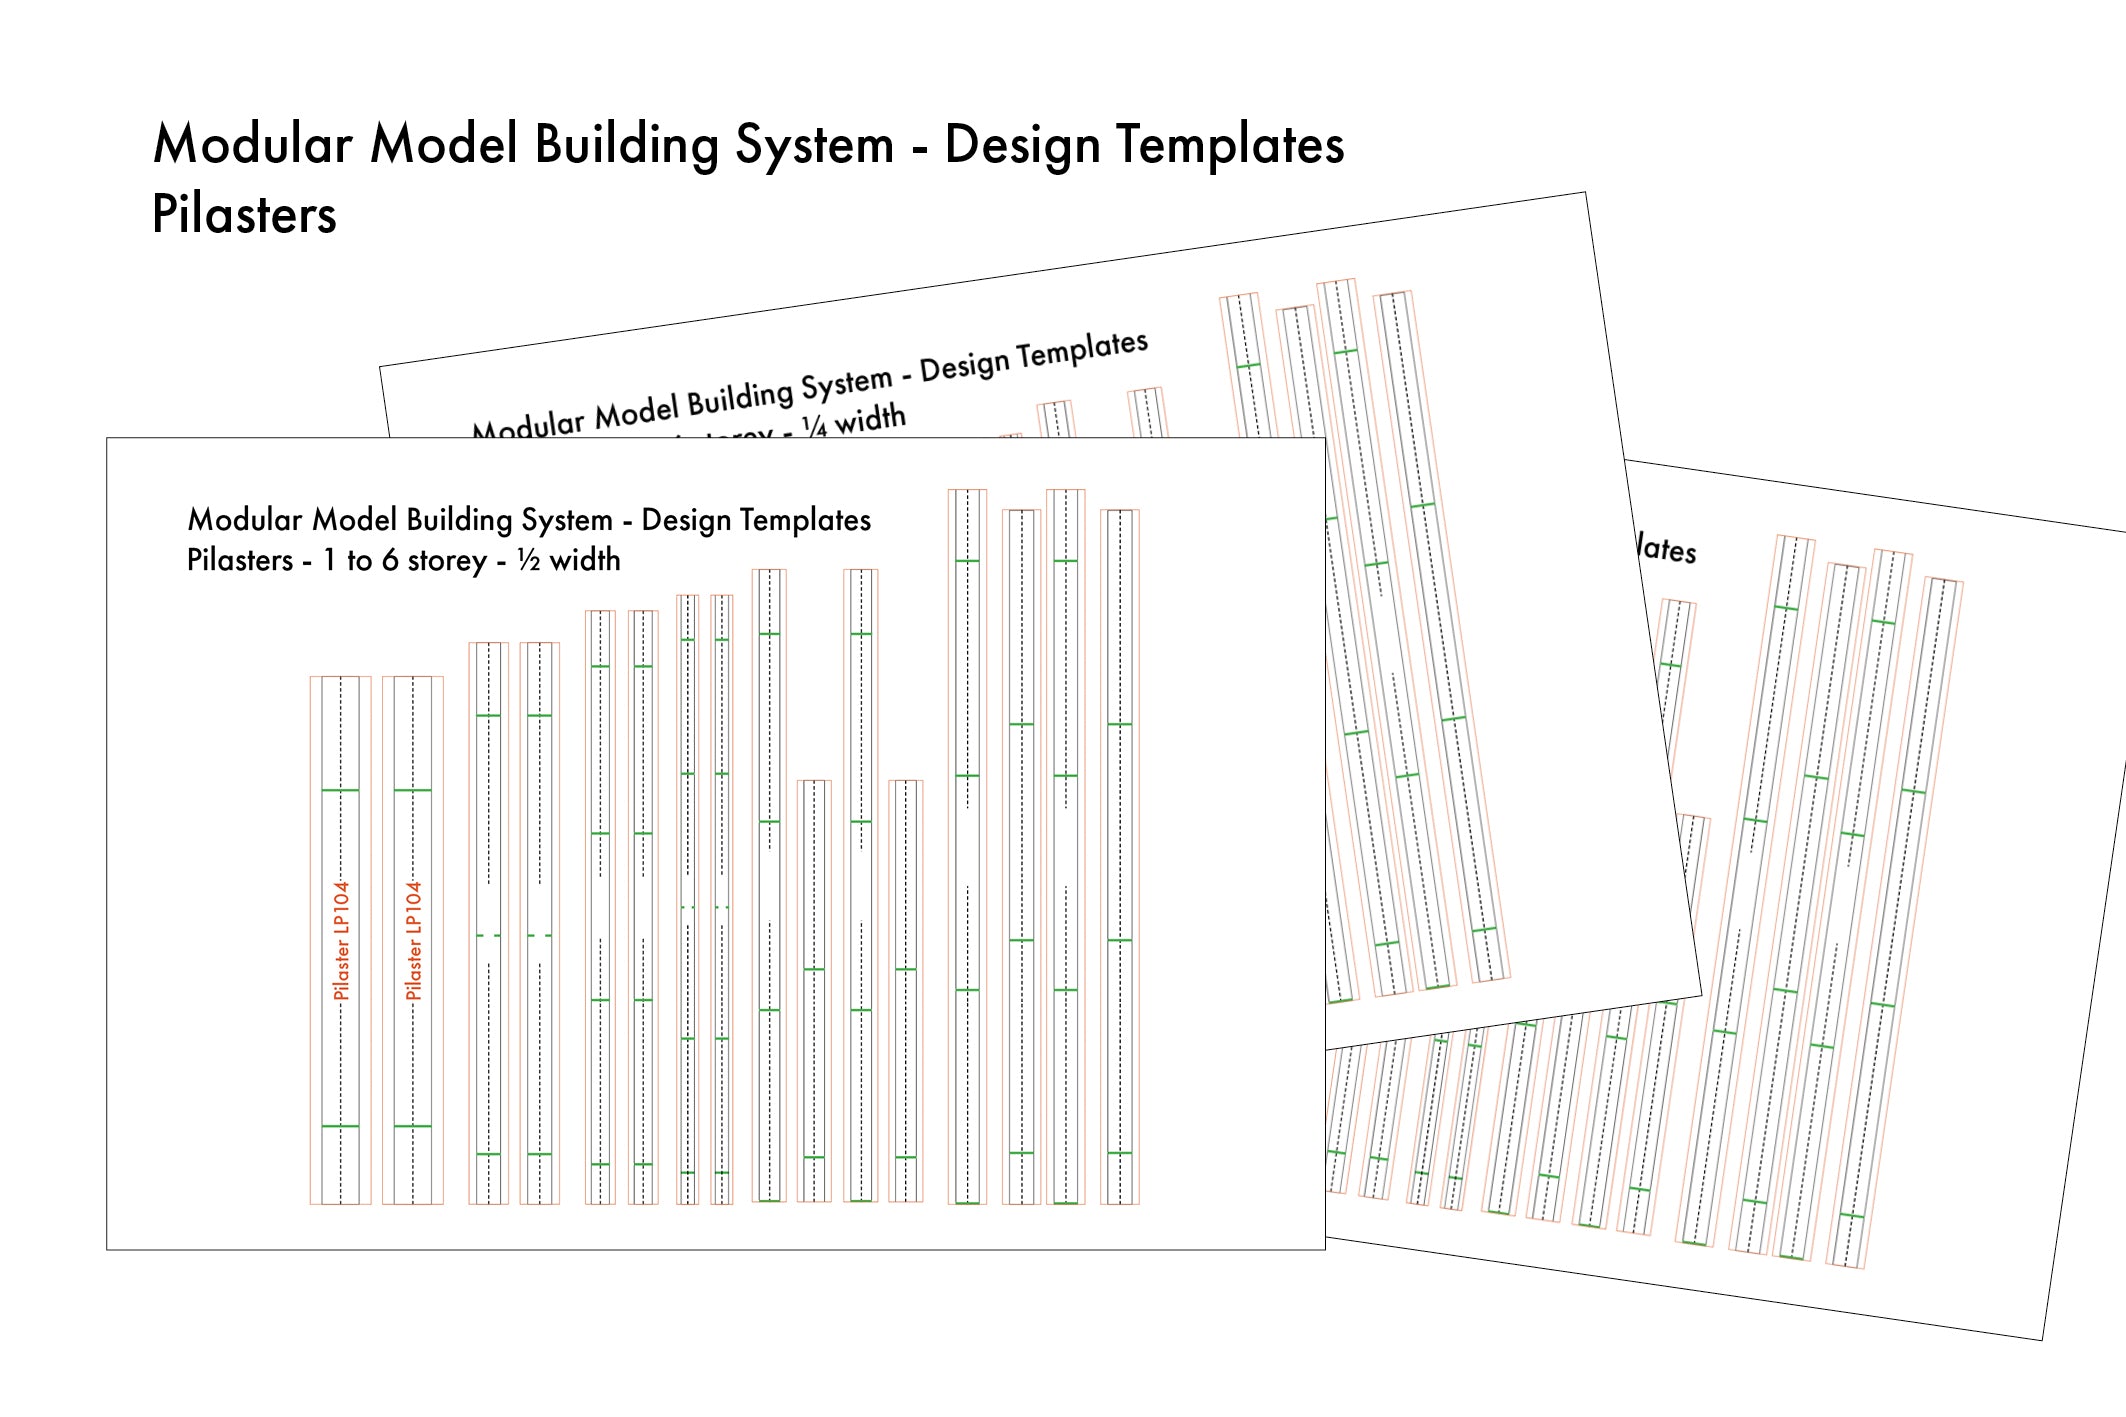 MMBSDTP - Pilaster templates